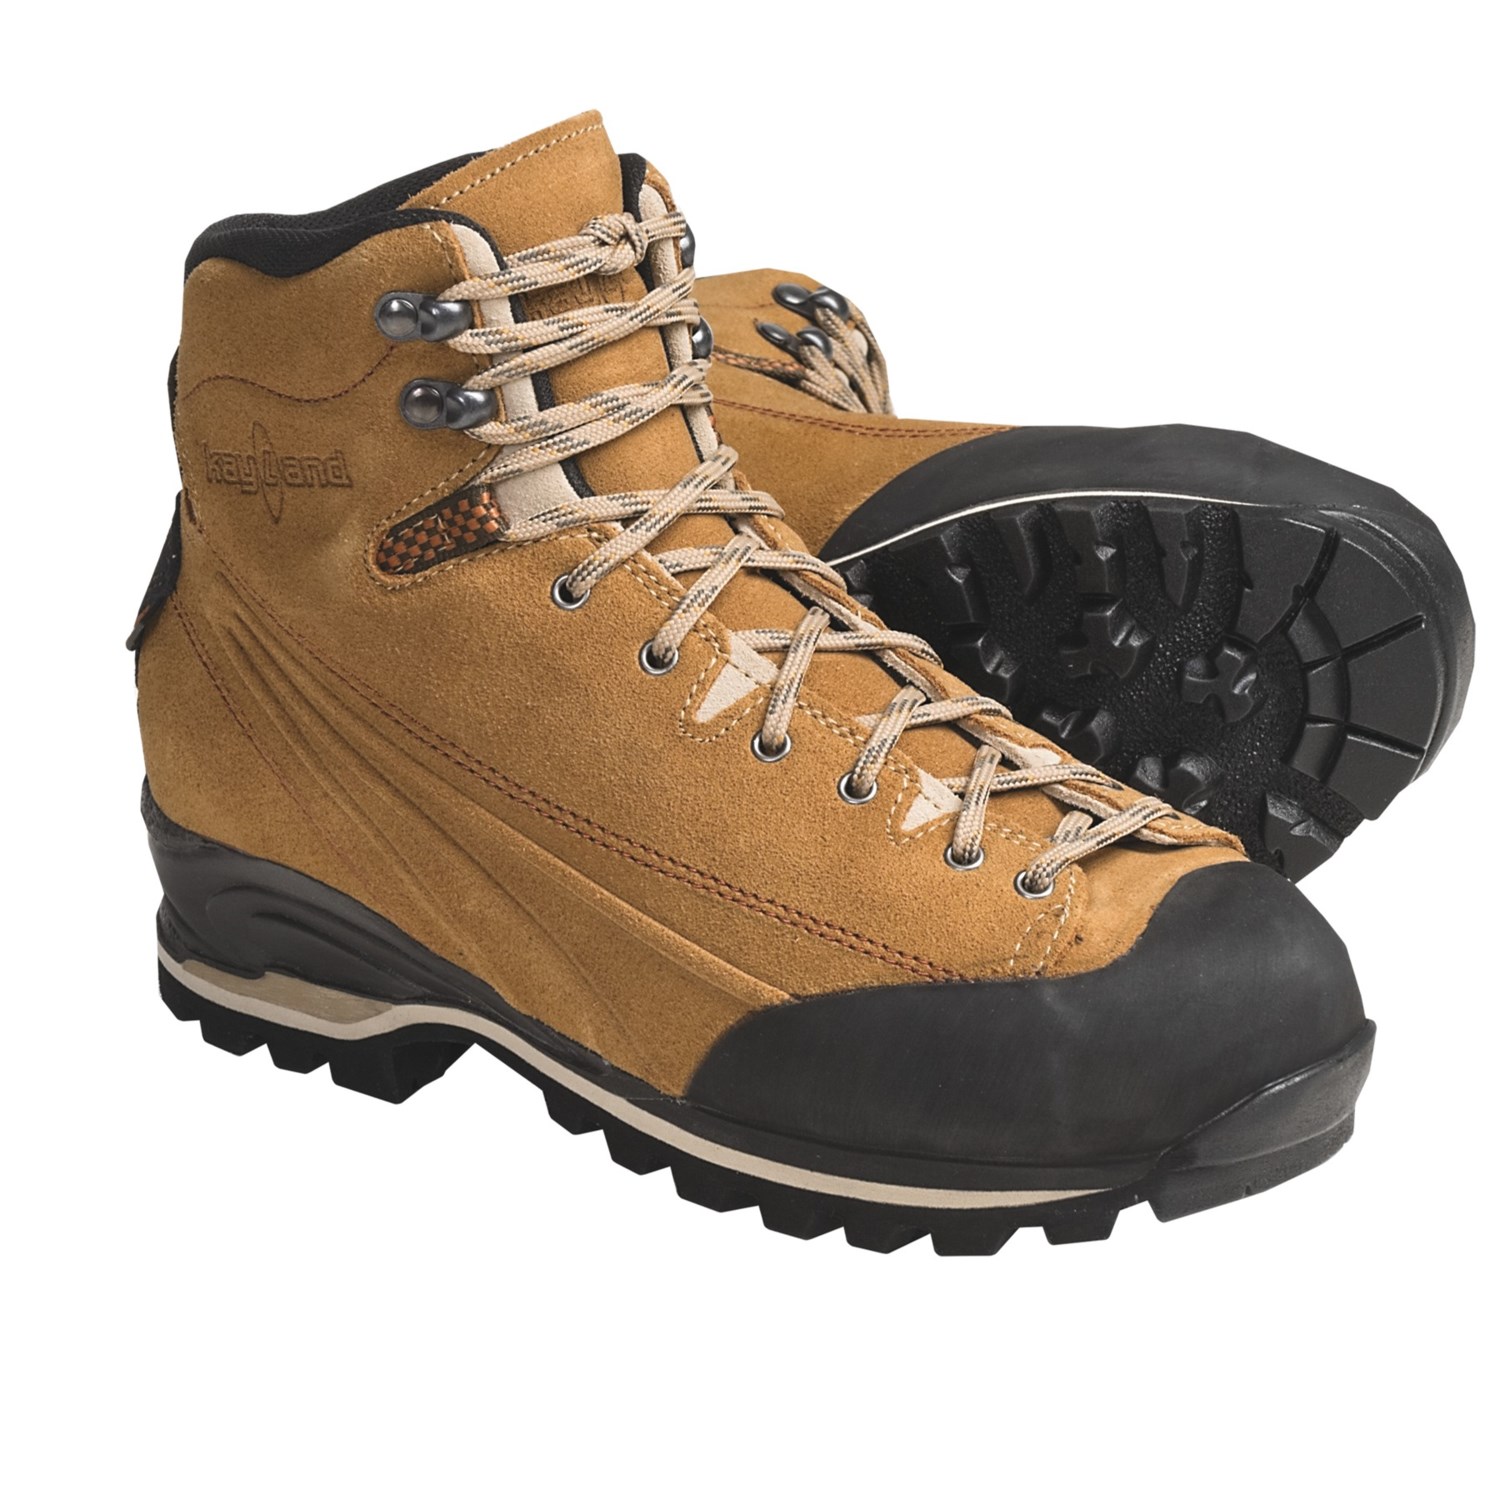 Kayland Vertigo High eVent® Hiking Boots (For Women) 4057D - Save 37%